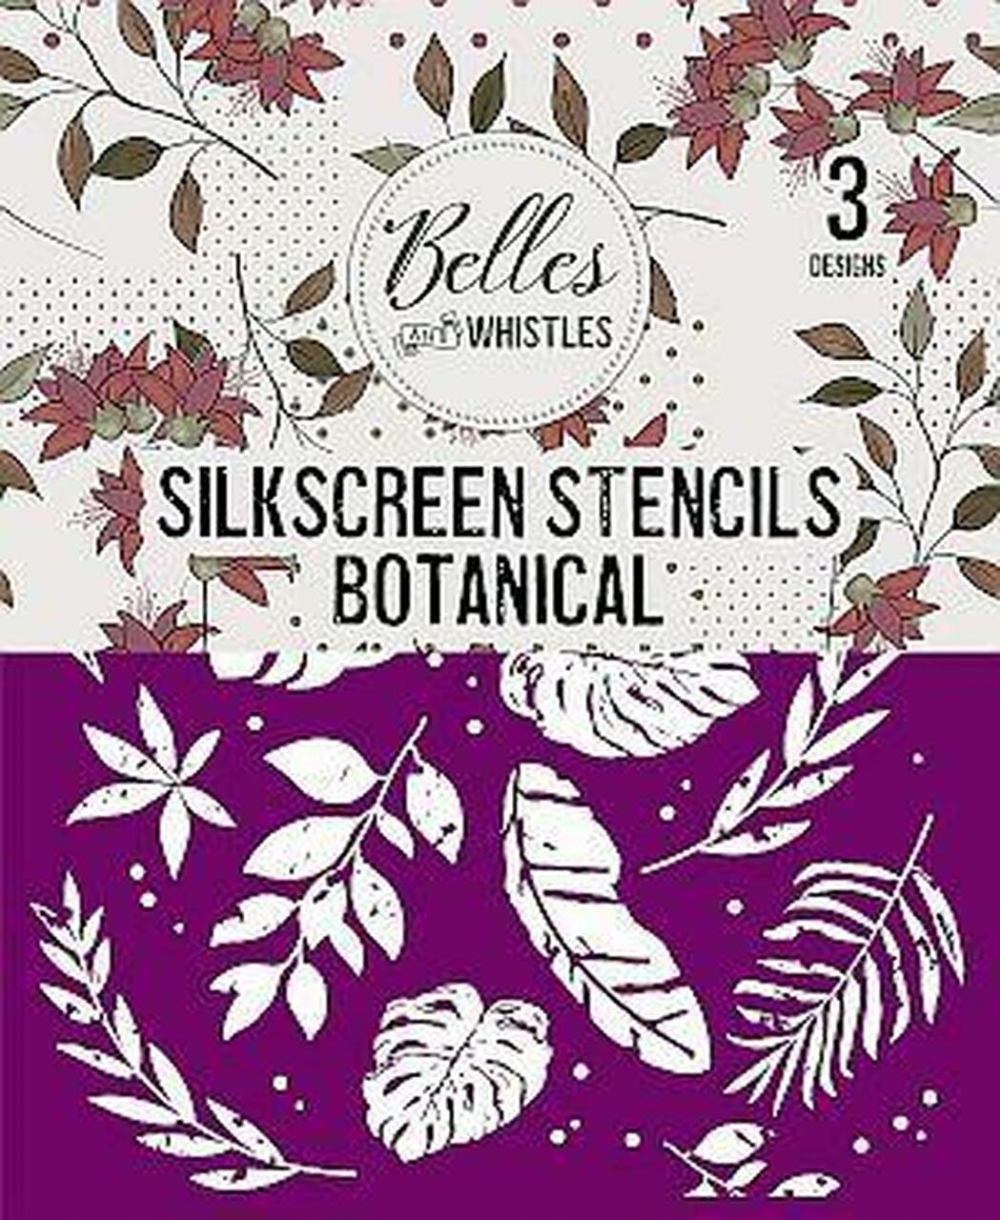 Belles and Whistles Silkscreen Stencil – Lightweight Adhesive – Reusable – Botanical 20x25cm